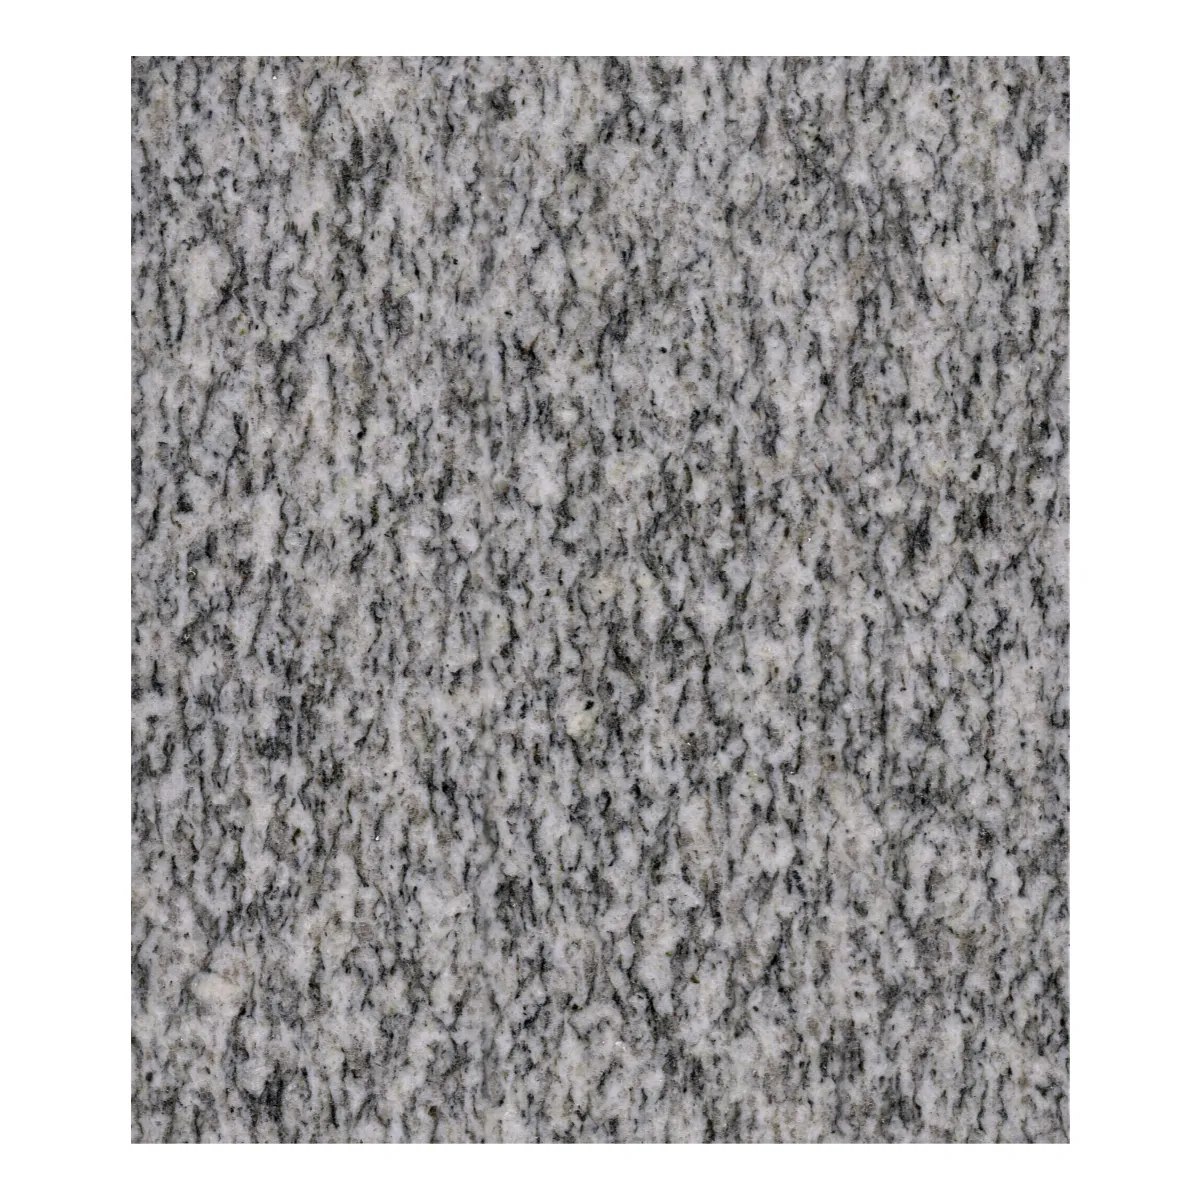 Chinese High Quality Silver Gray Silver Point White Hemp Polishing Board Granite